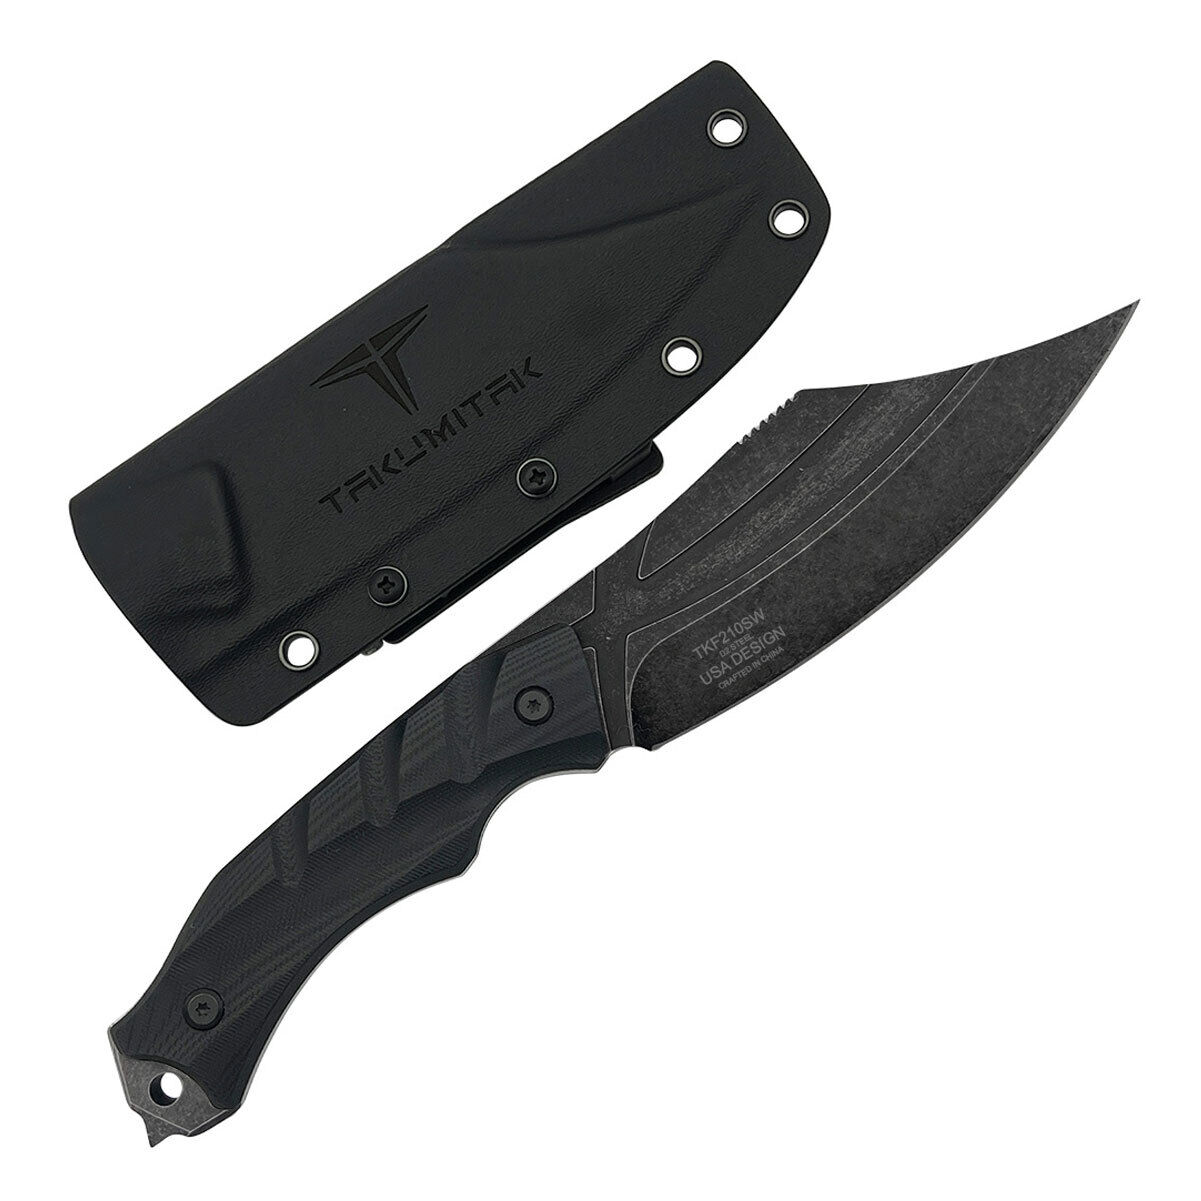 TAKUMITAK Alert Stonewash D2 Clip Point Blade G10 Handle Fixed Knife with Sheath